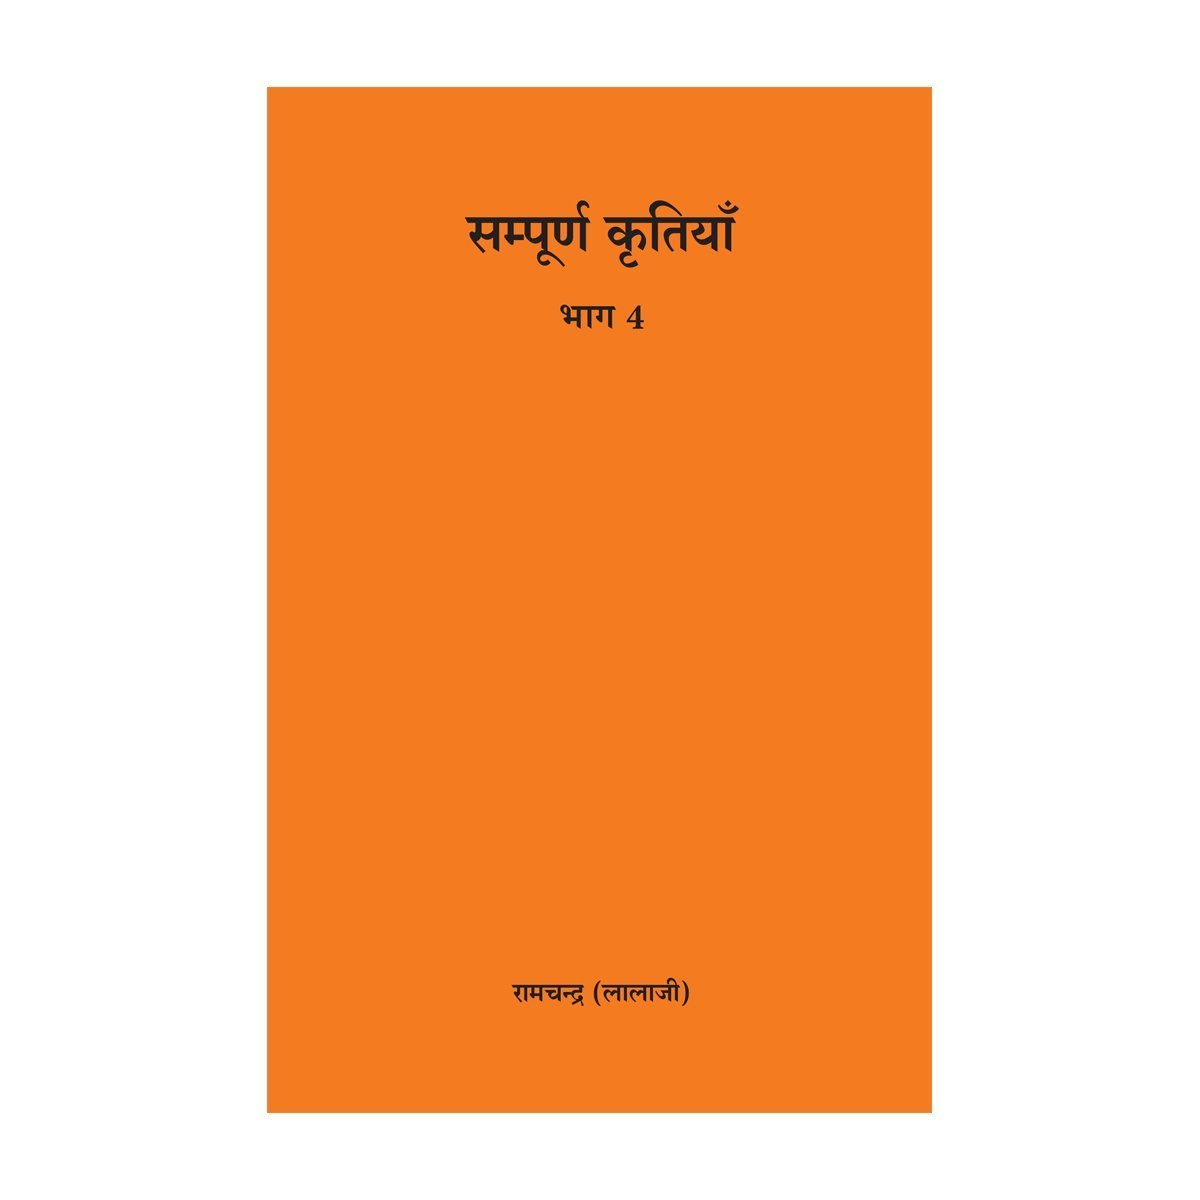 Complete Works of Ram Chandra (Lalaji) - Volume 4